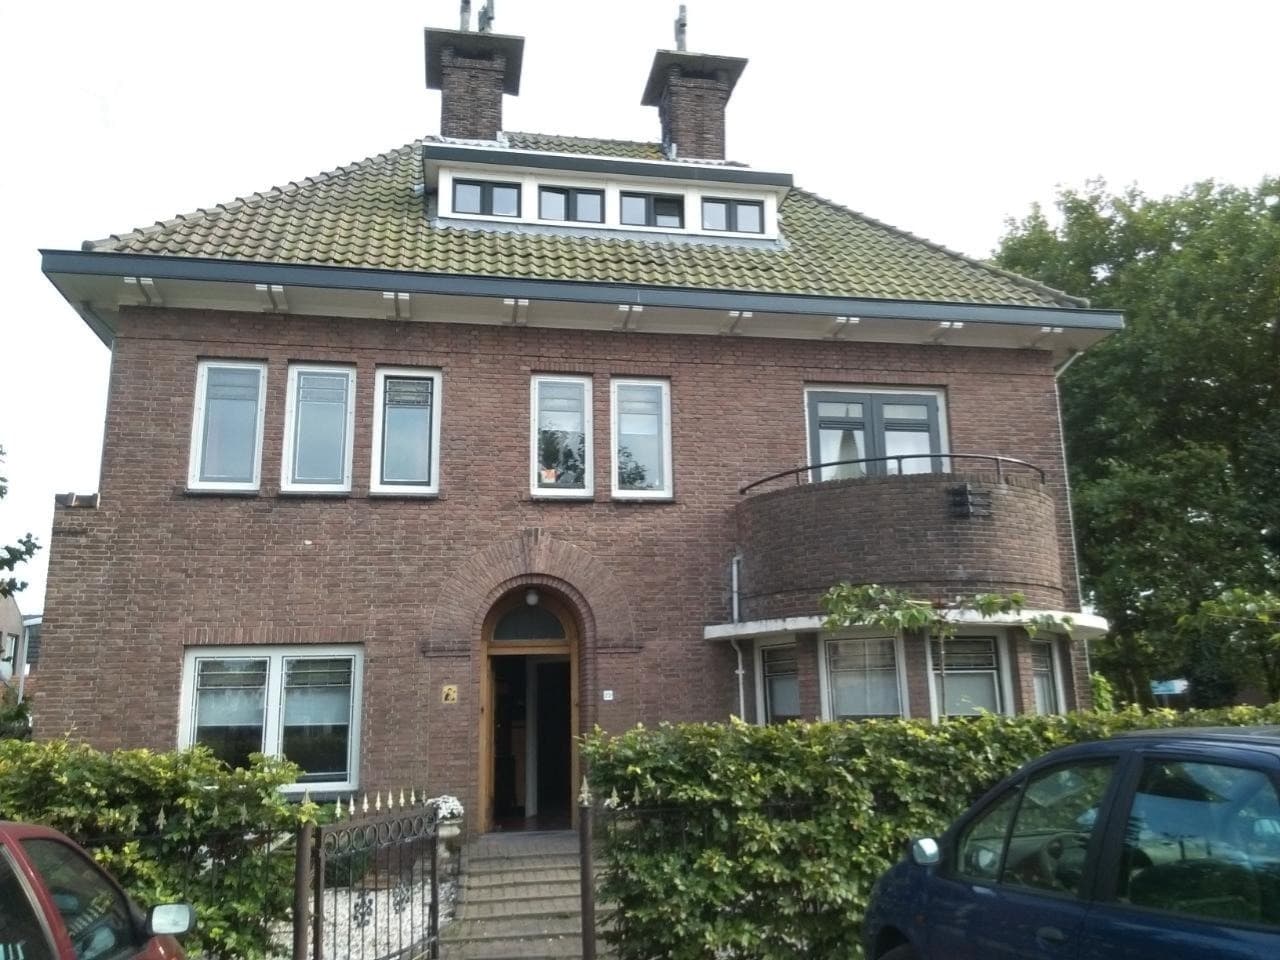 show all photos of Korte Kerkstraat